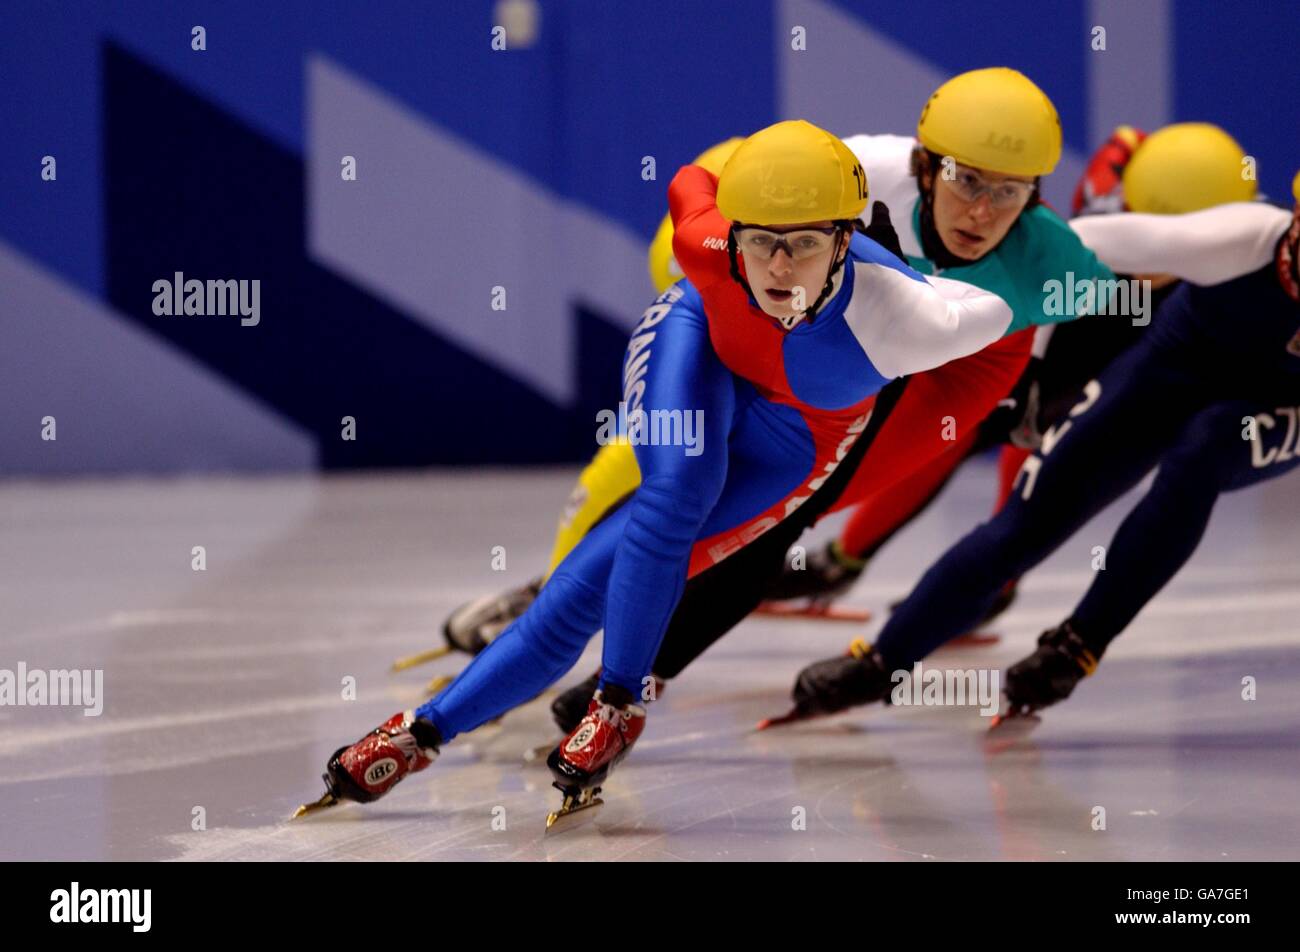 Winter Olympics - Salt Lake City 2002 - Short Track Speed Skating - Women's  1500m. France's Stephanie Bouvier leads her heat Stock Photo - Alamy